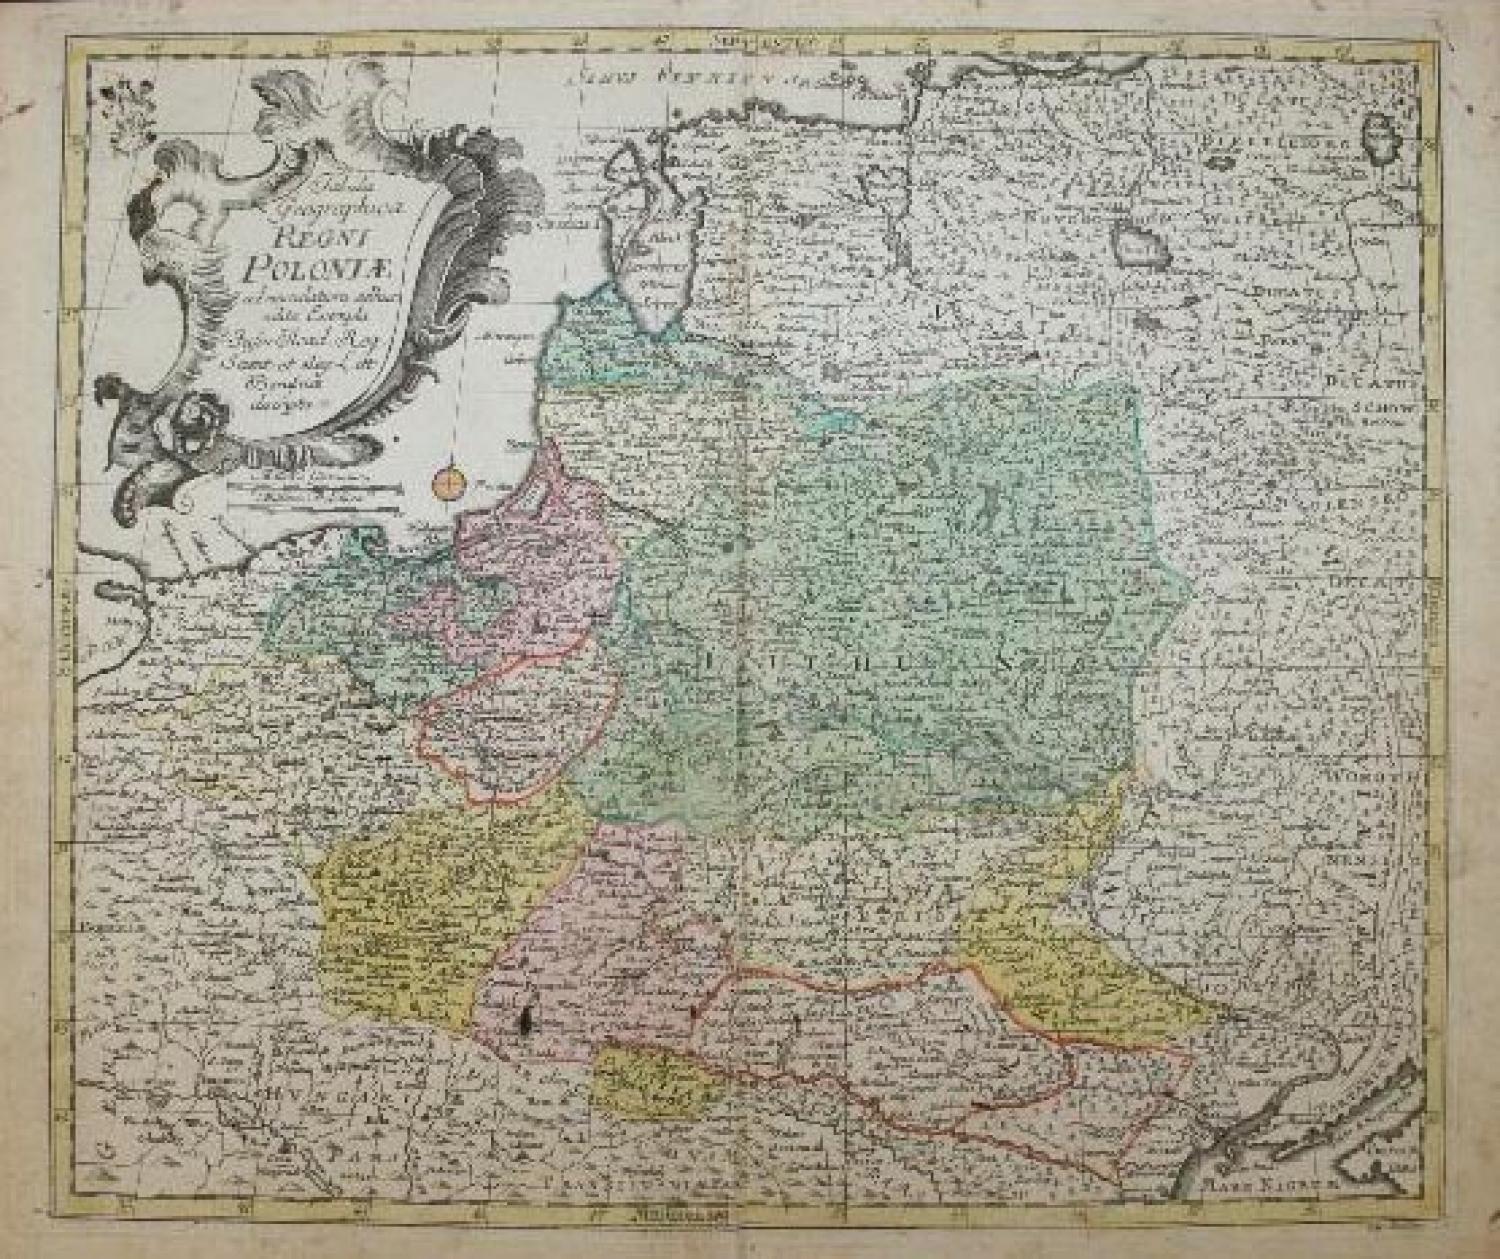 SOLD Tabula Geographica Regnim Poloniae ad emendatiora